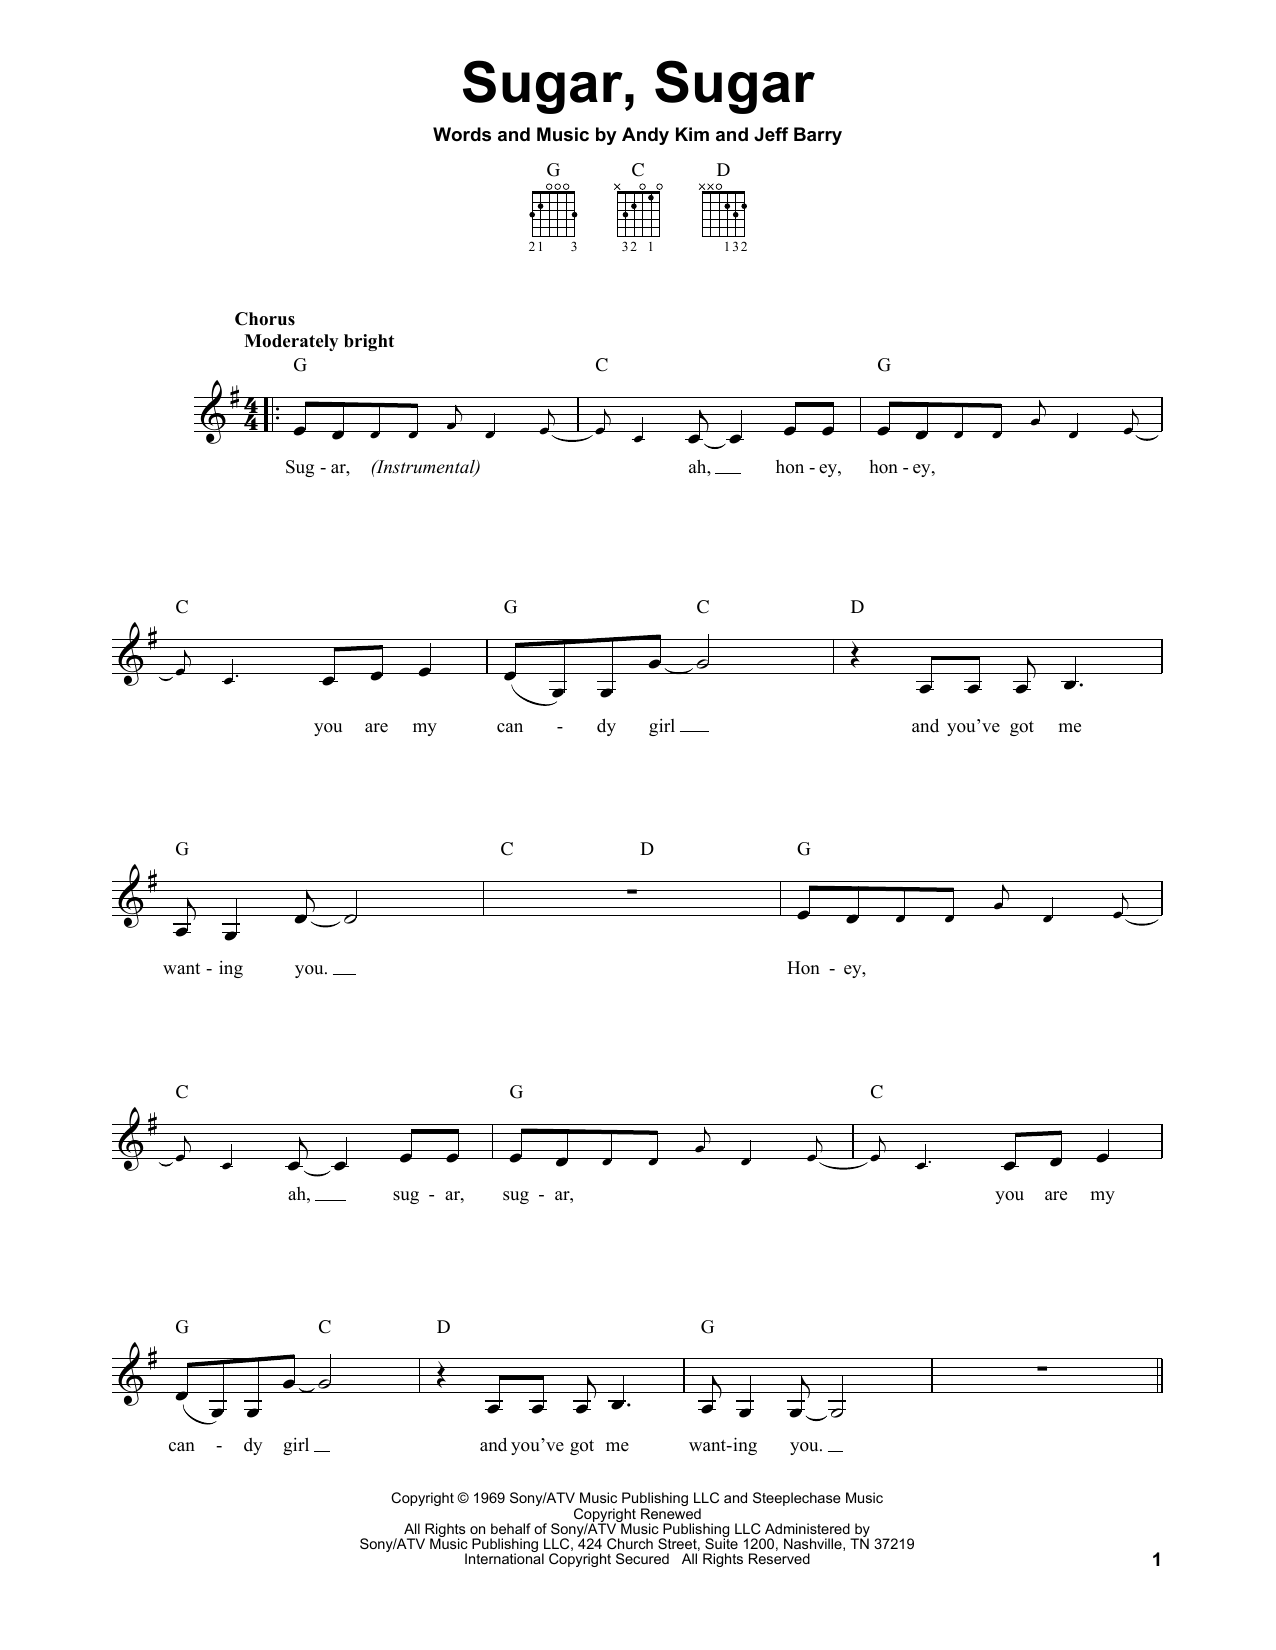 Wilson Pickett Sugar, Sugar Sheet Music Notes & Chords for Easy Guitar - Download or Print PDF